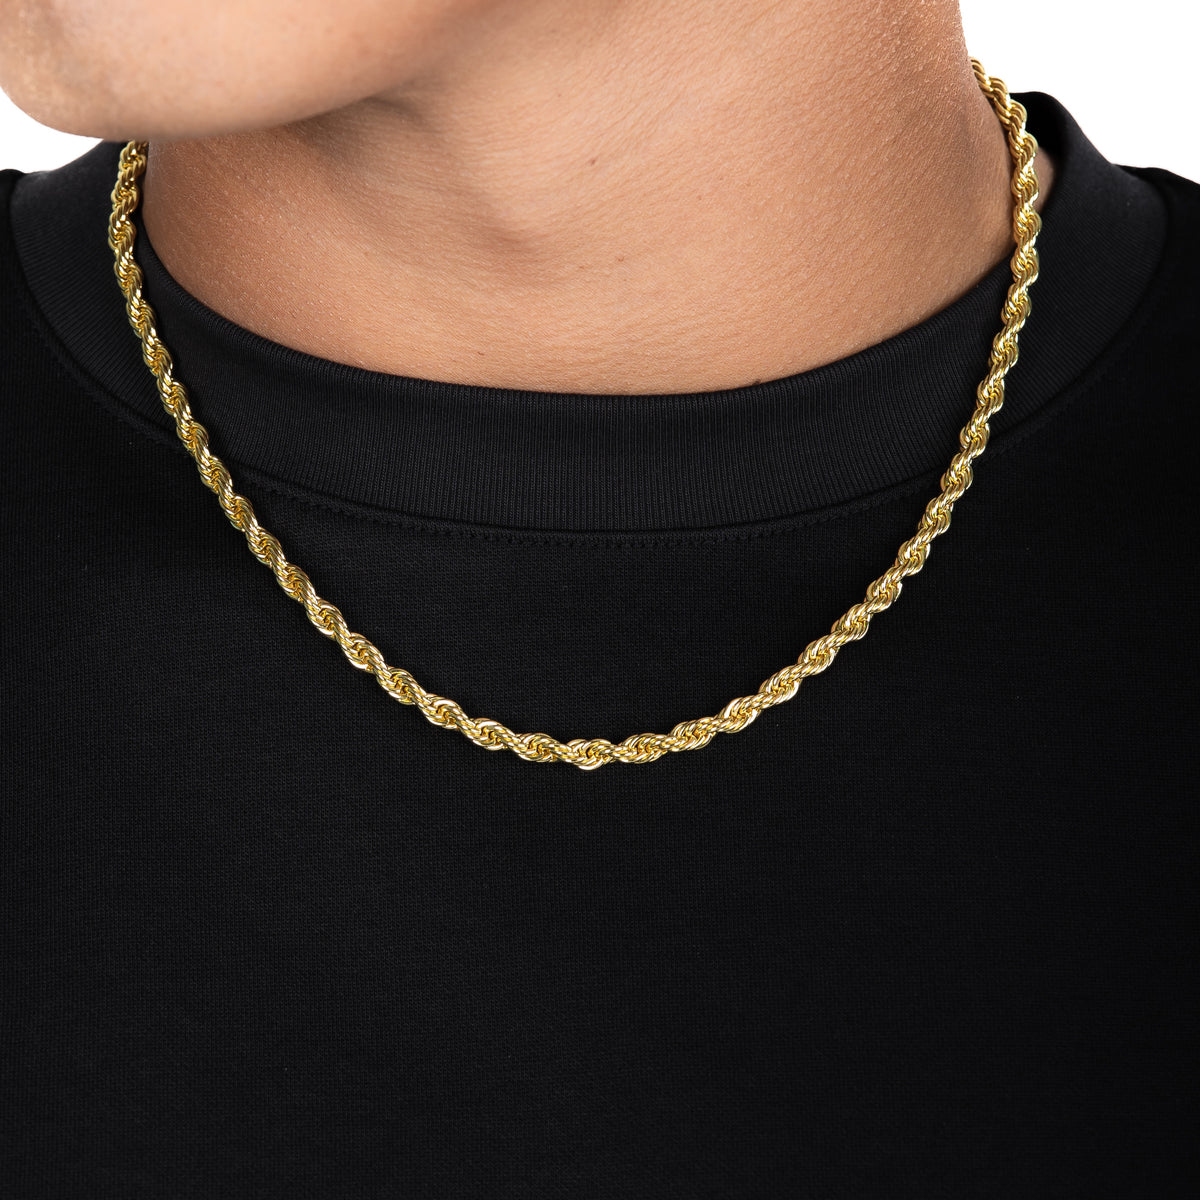 5mm Diamond Cut Franco Chain, 18K Gold Chain Men’s White Gold Necklace